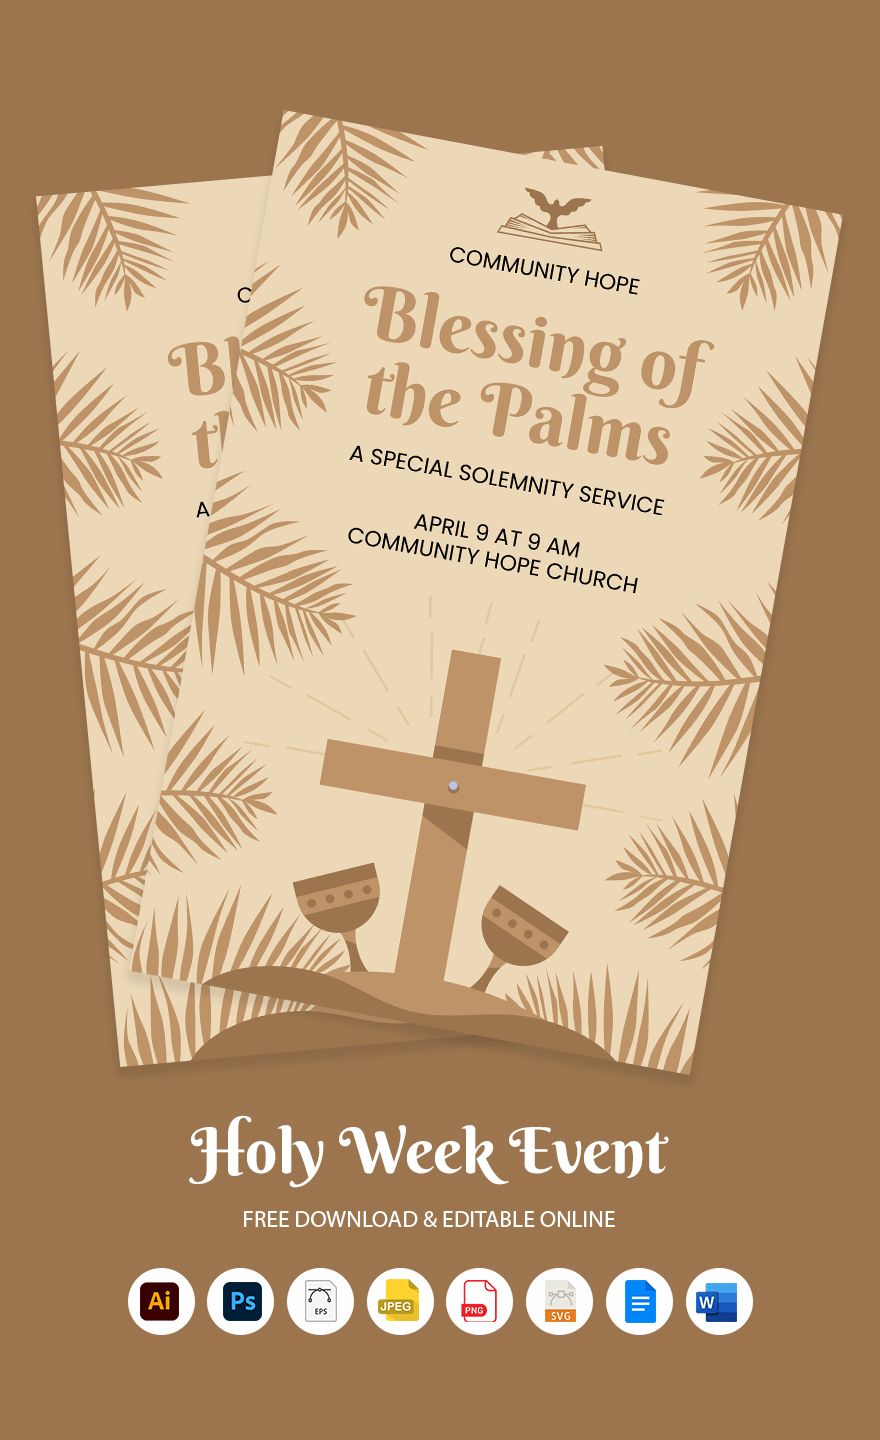 Holy Week Event in Word, Google Docs, Illustrator, PSD, EPS, SVG, JPG, PNG